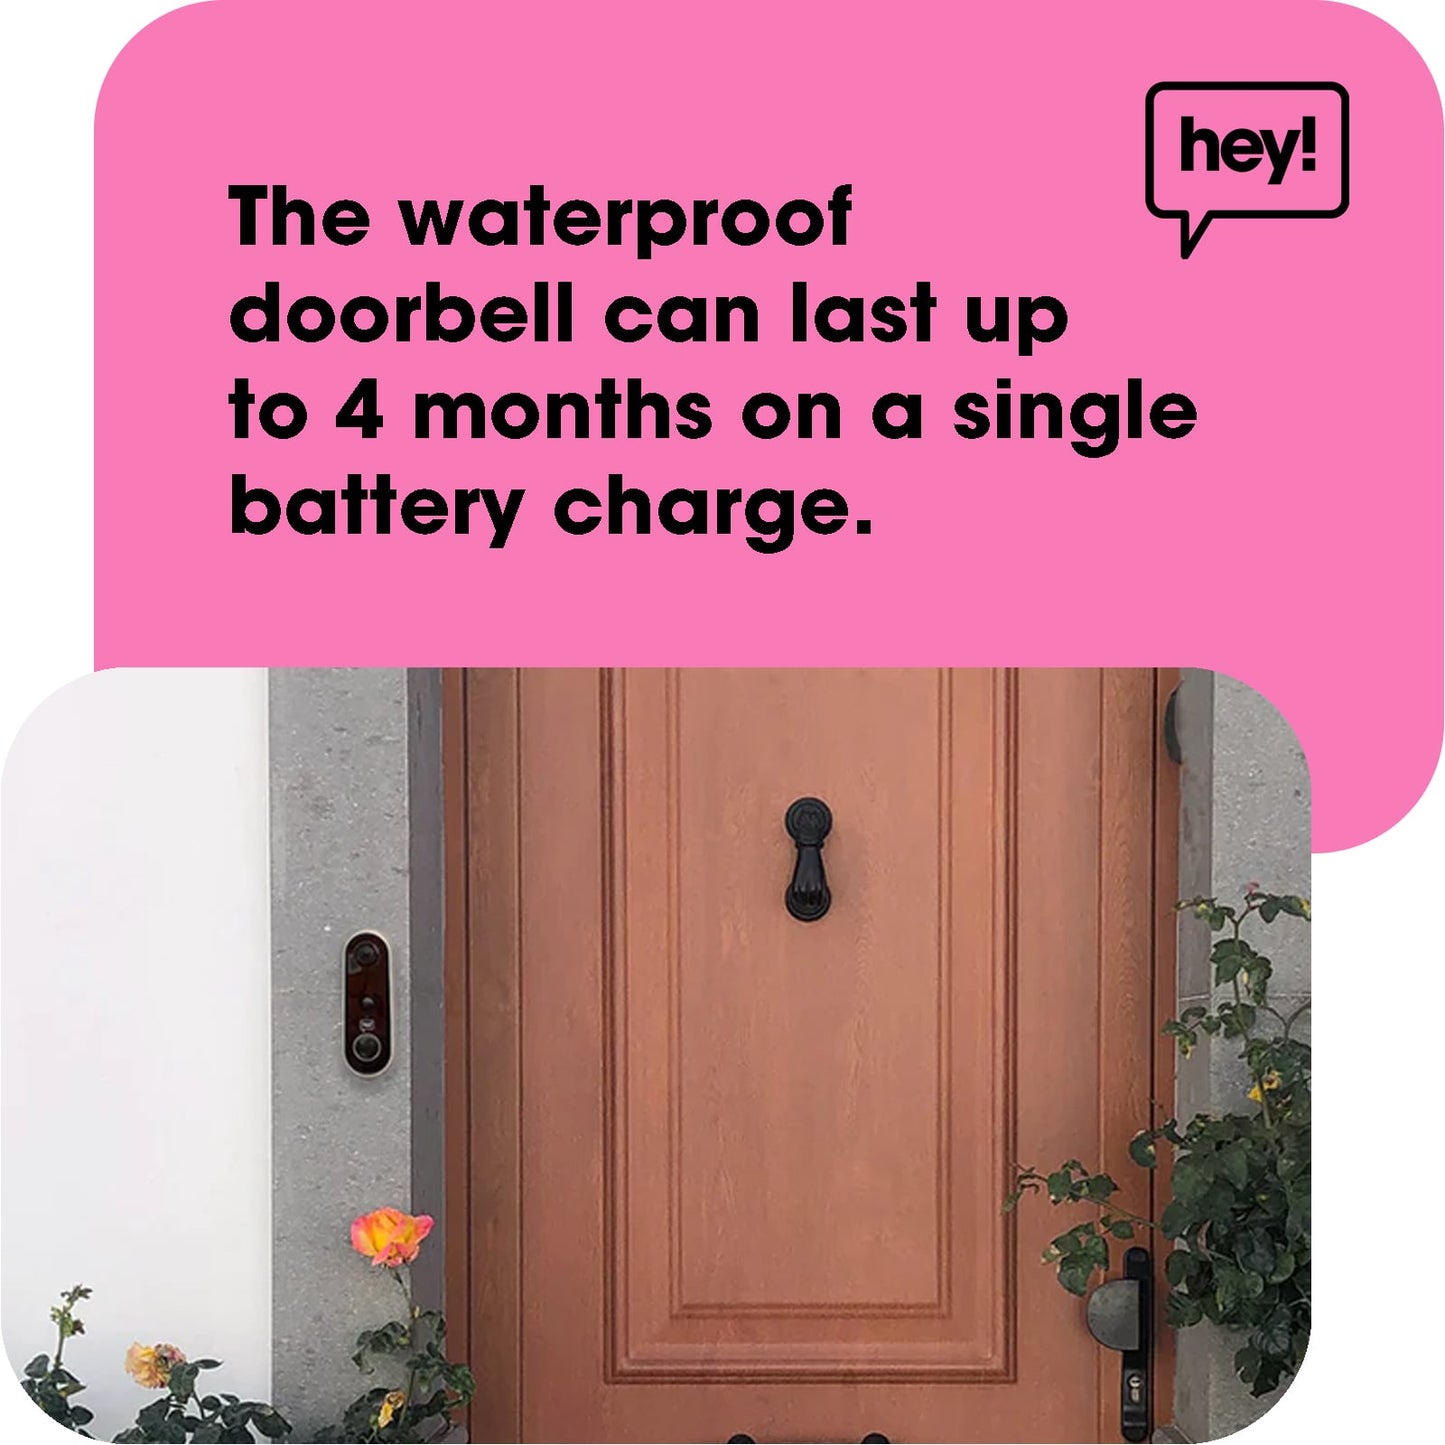 Smart Video Doorbell (Subscription-Free)